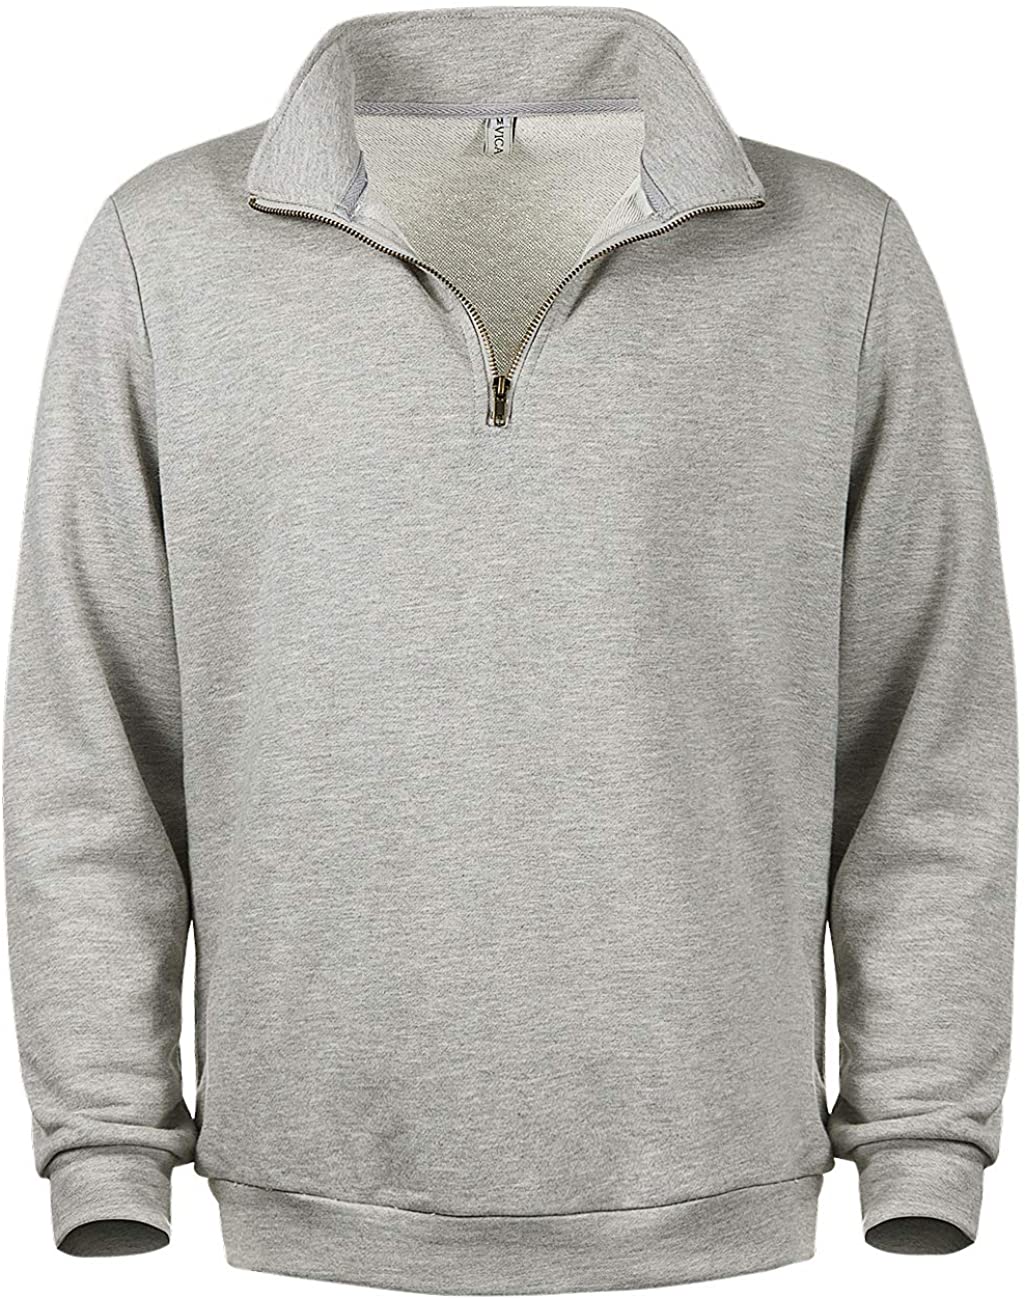 VICALLED Mens 1/4 Zip Sweatshirt Performance Stand Collar Regular Fit Quarter Zip Pullover